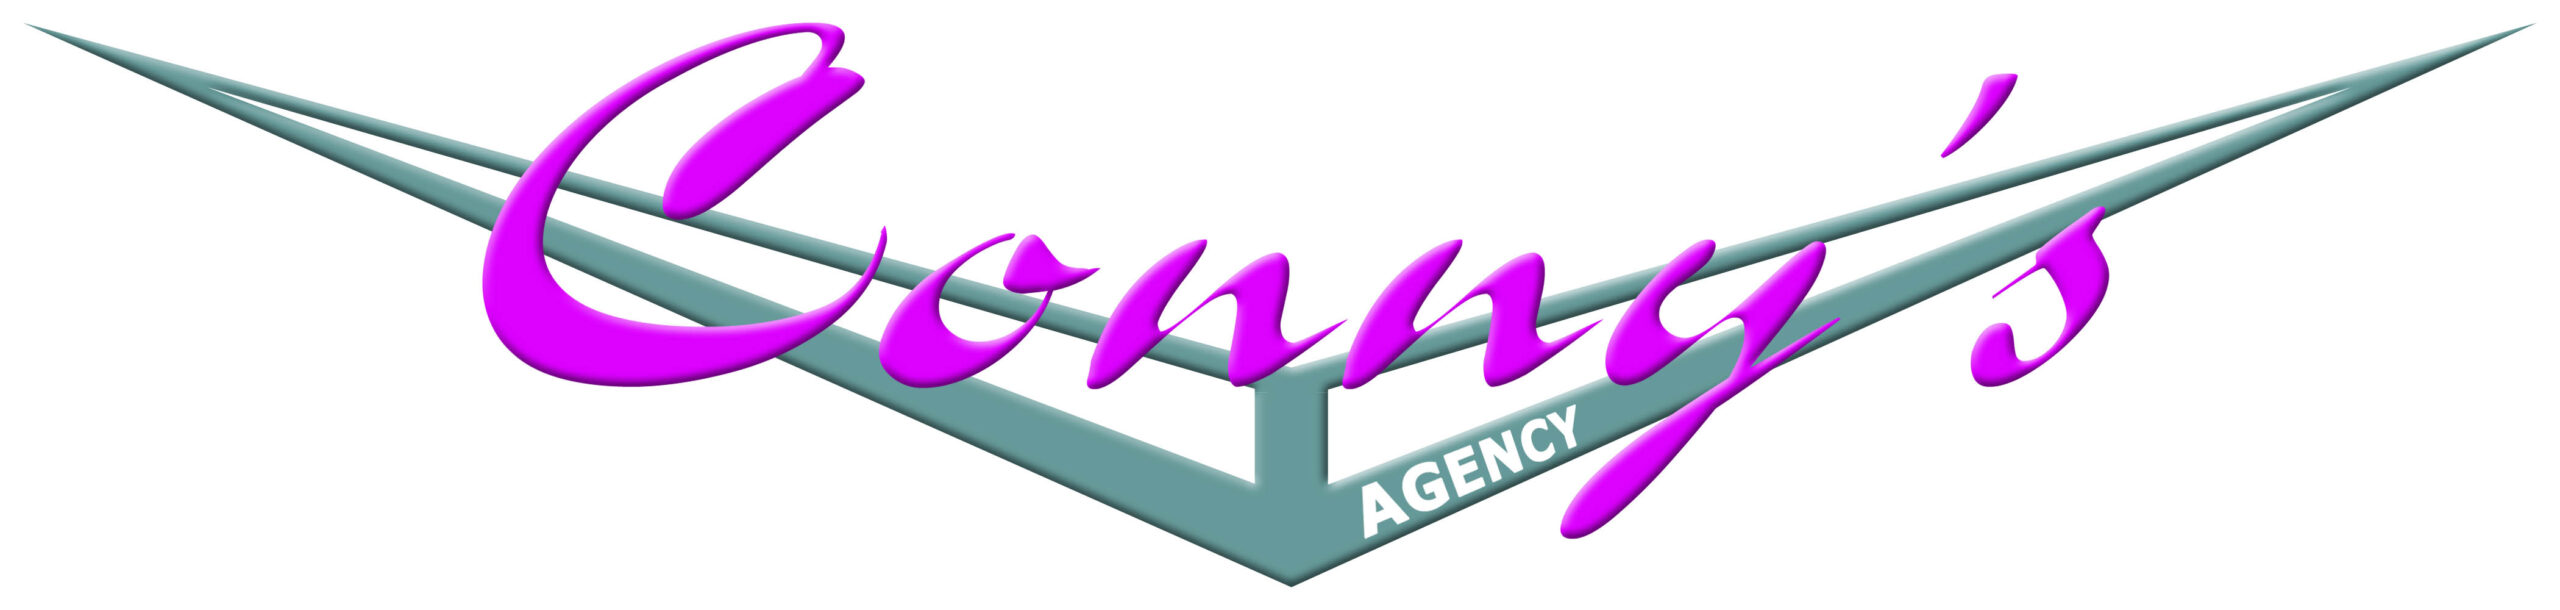 Connys Agency Oldtimer Webpage